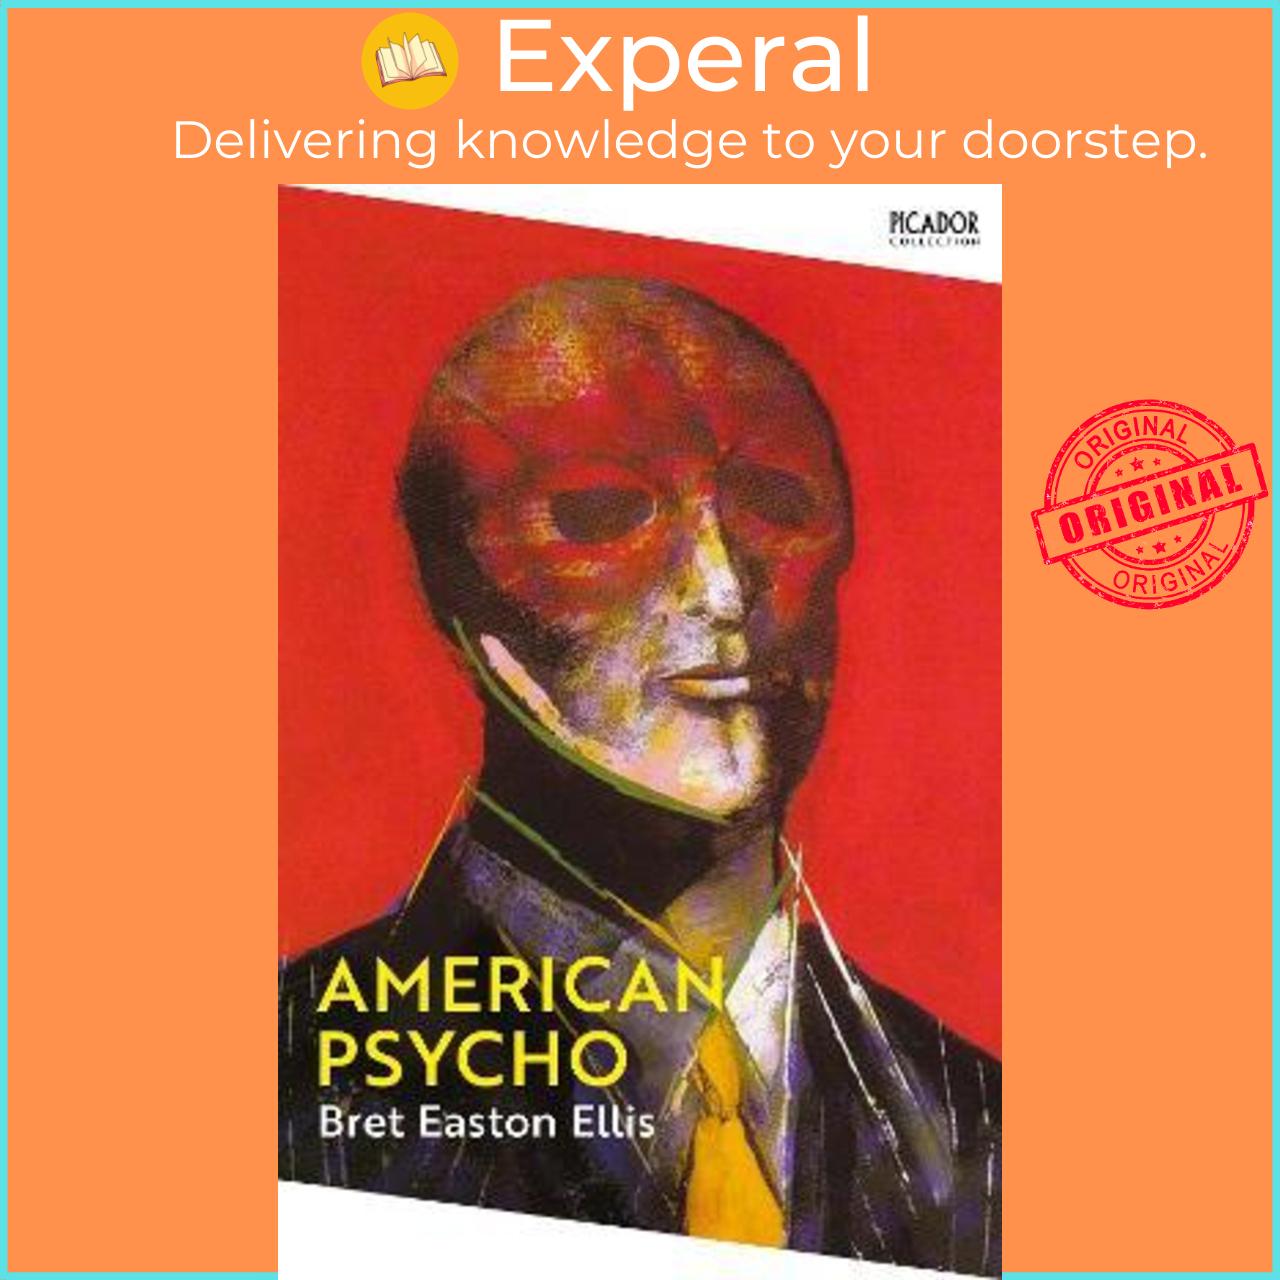 Sách - American Psycho by Bret Easton Ellis (UK edition, paperback)